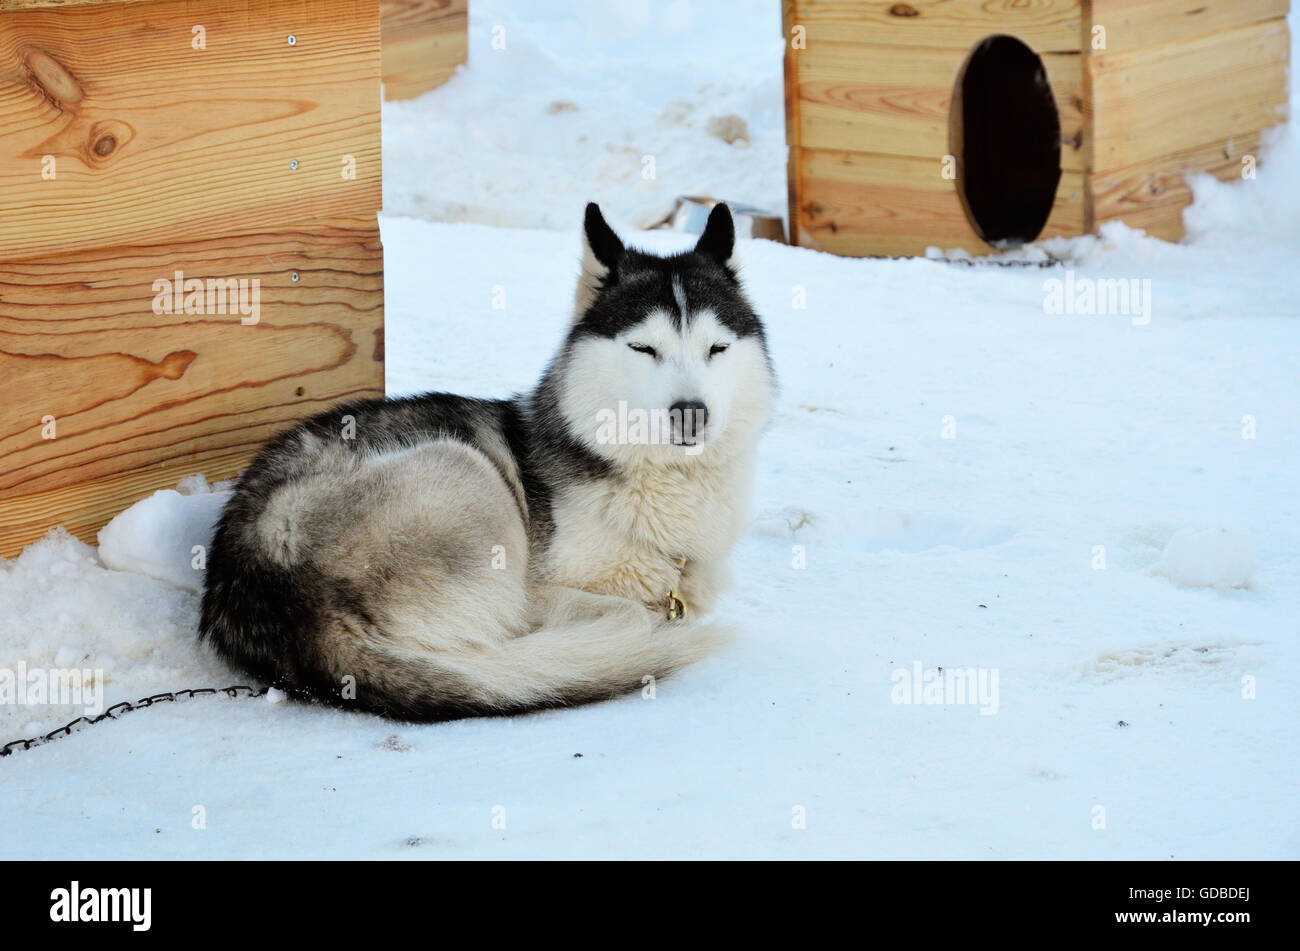 A sled dog Stock Photo